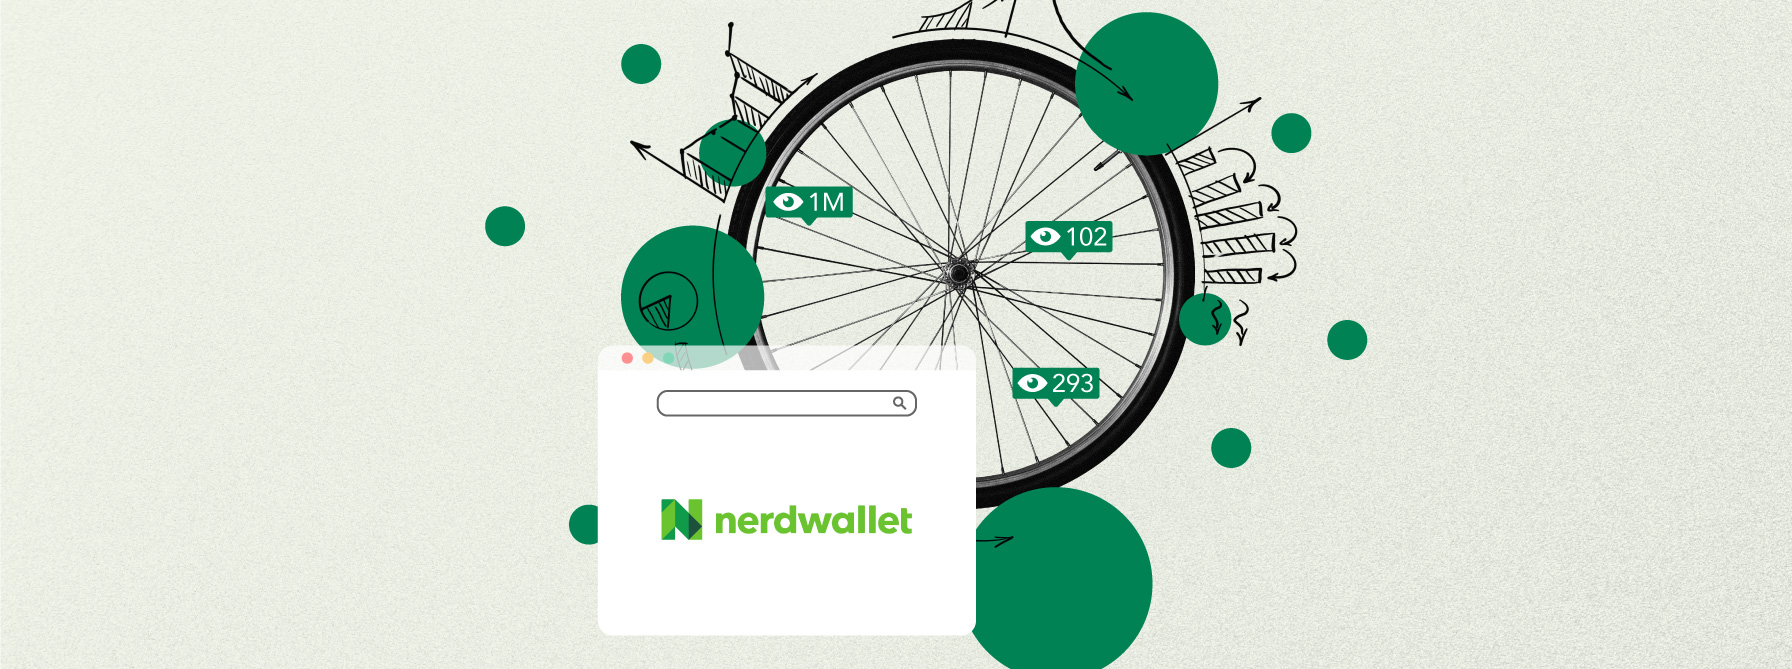 NerdWallet: Nailing SEO for finance brands